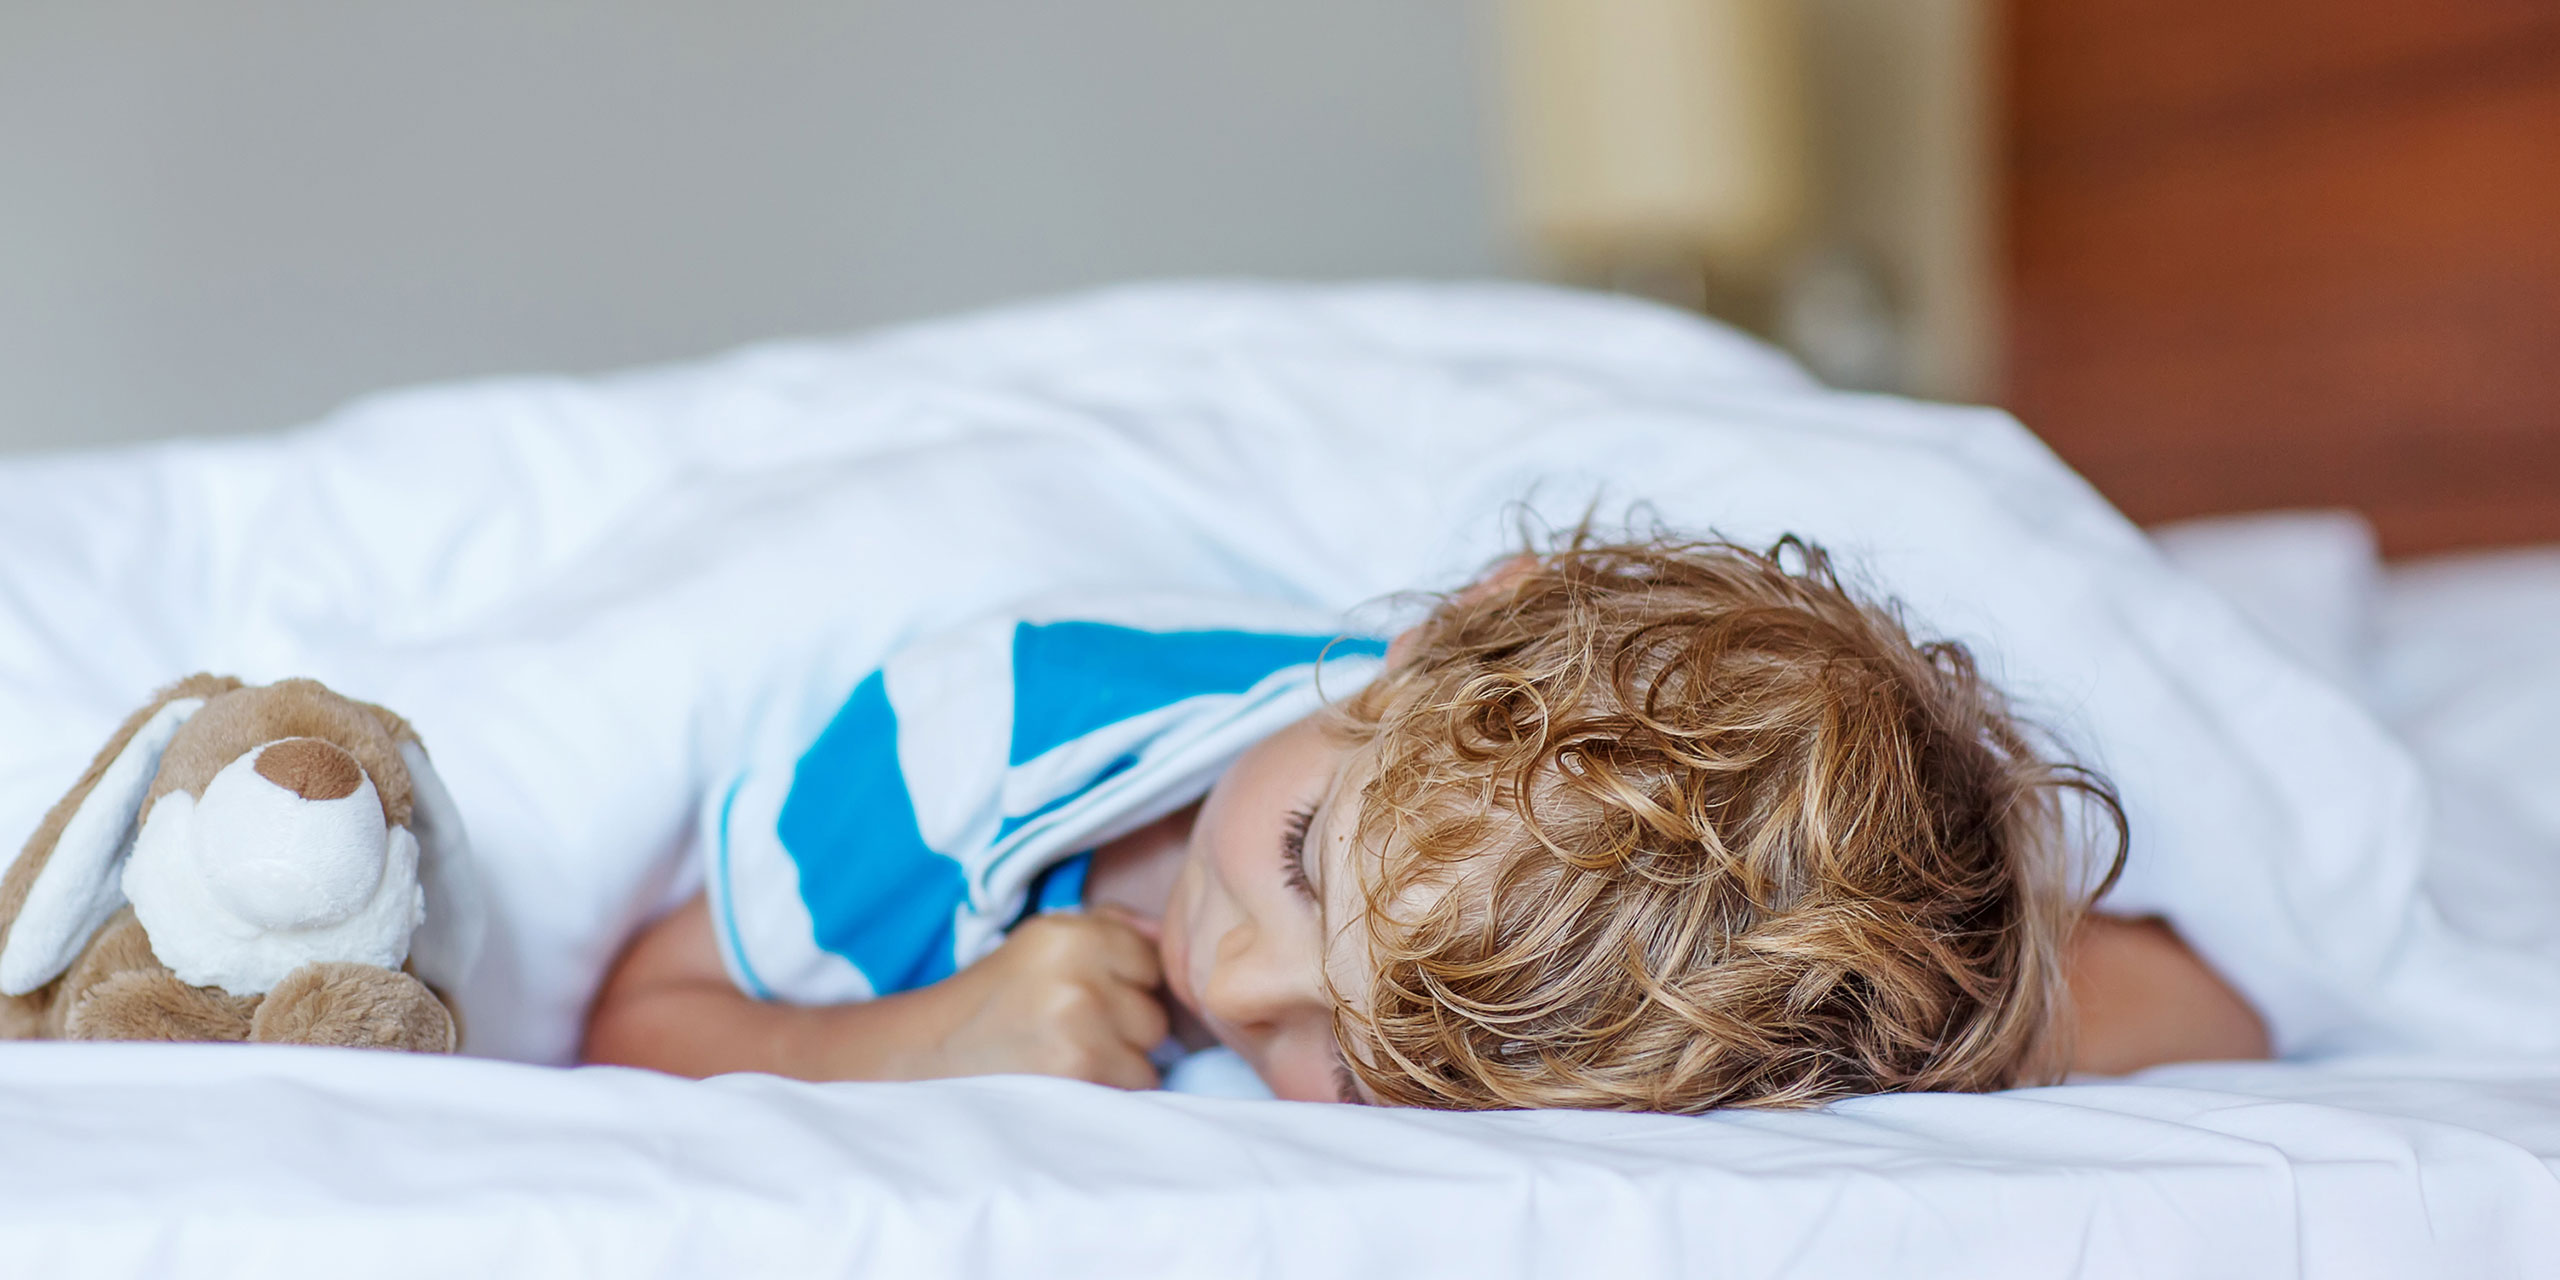 Sleeping Child; Courtesy of Romrodphoto/Shutterstock.com